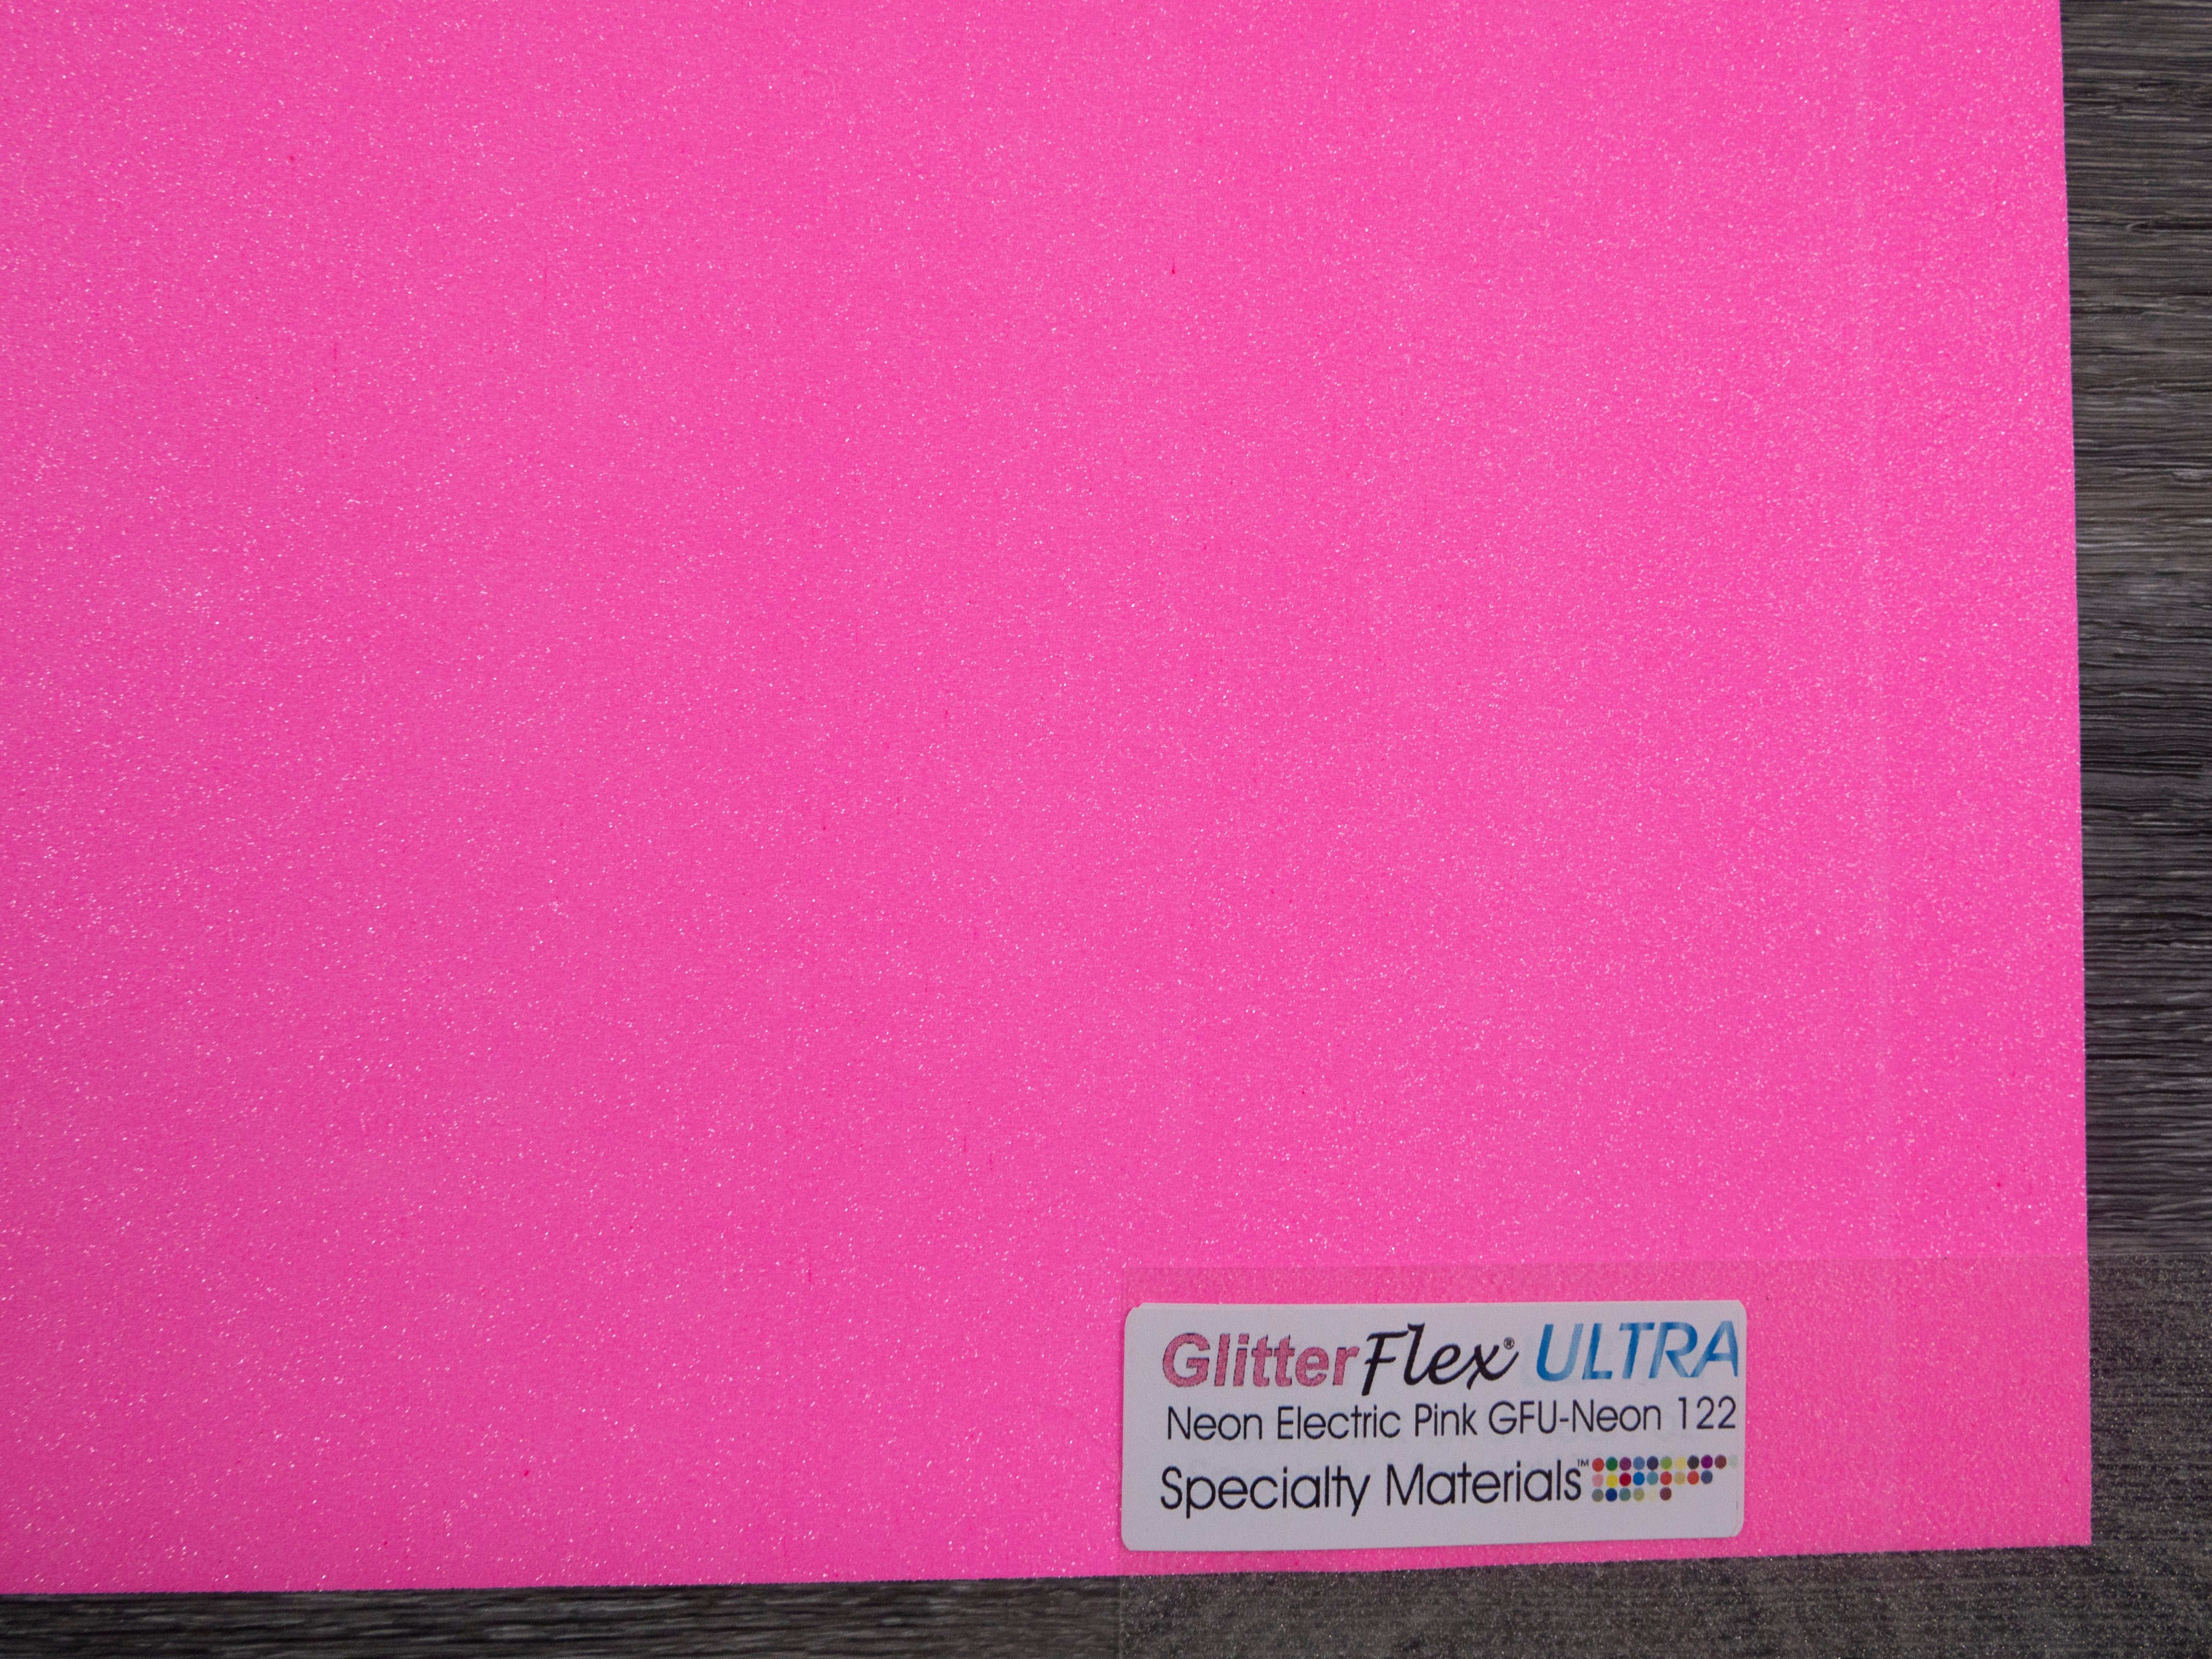 GlitterFlex ULTRA - GFU-NEON 122 Neon Electric Pink